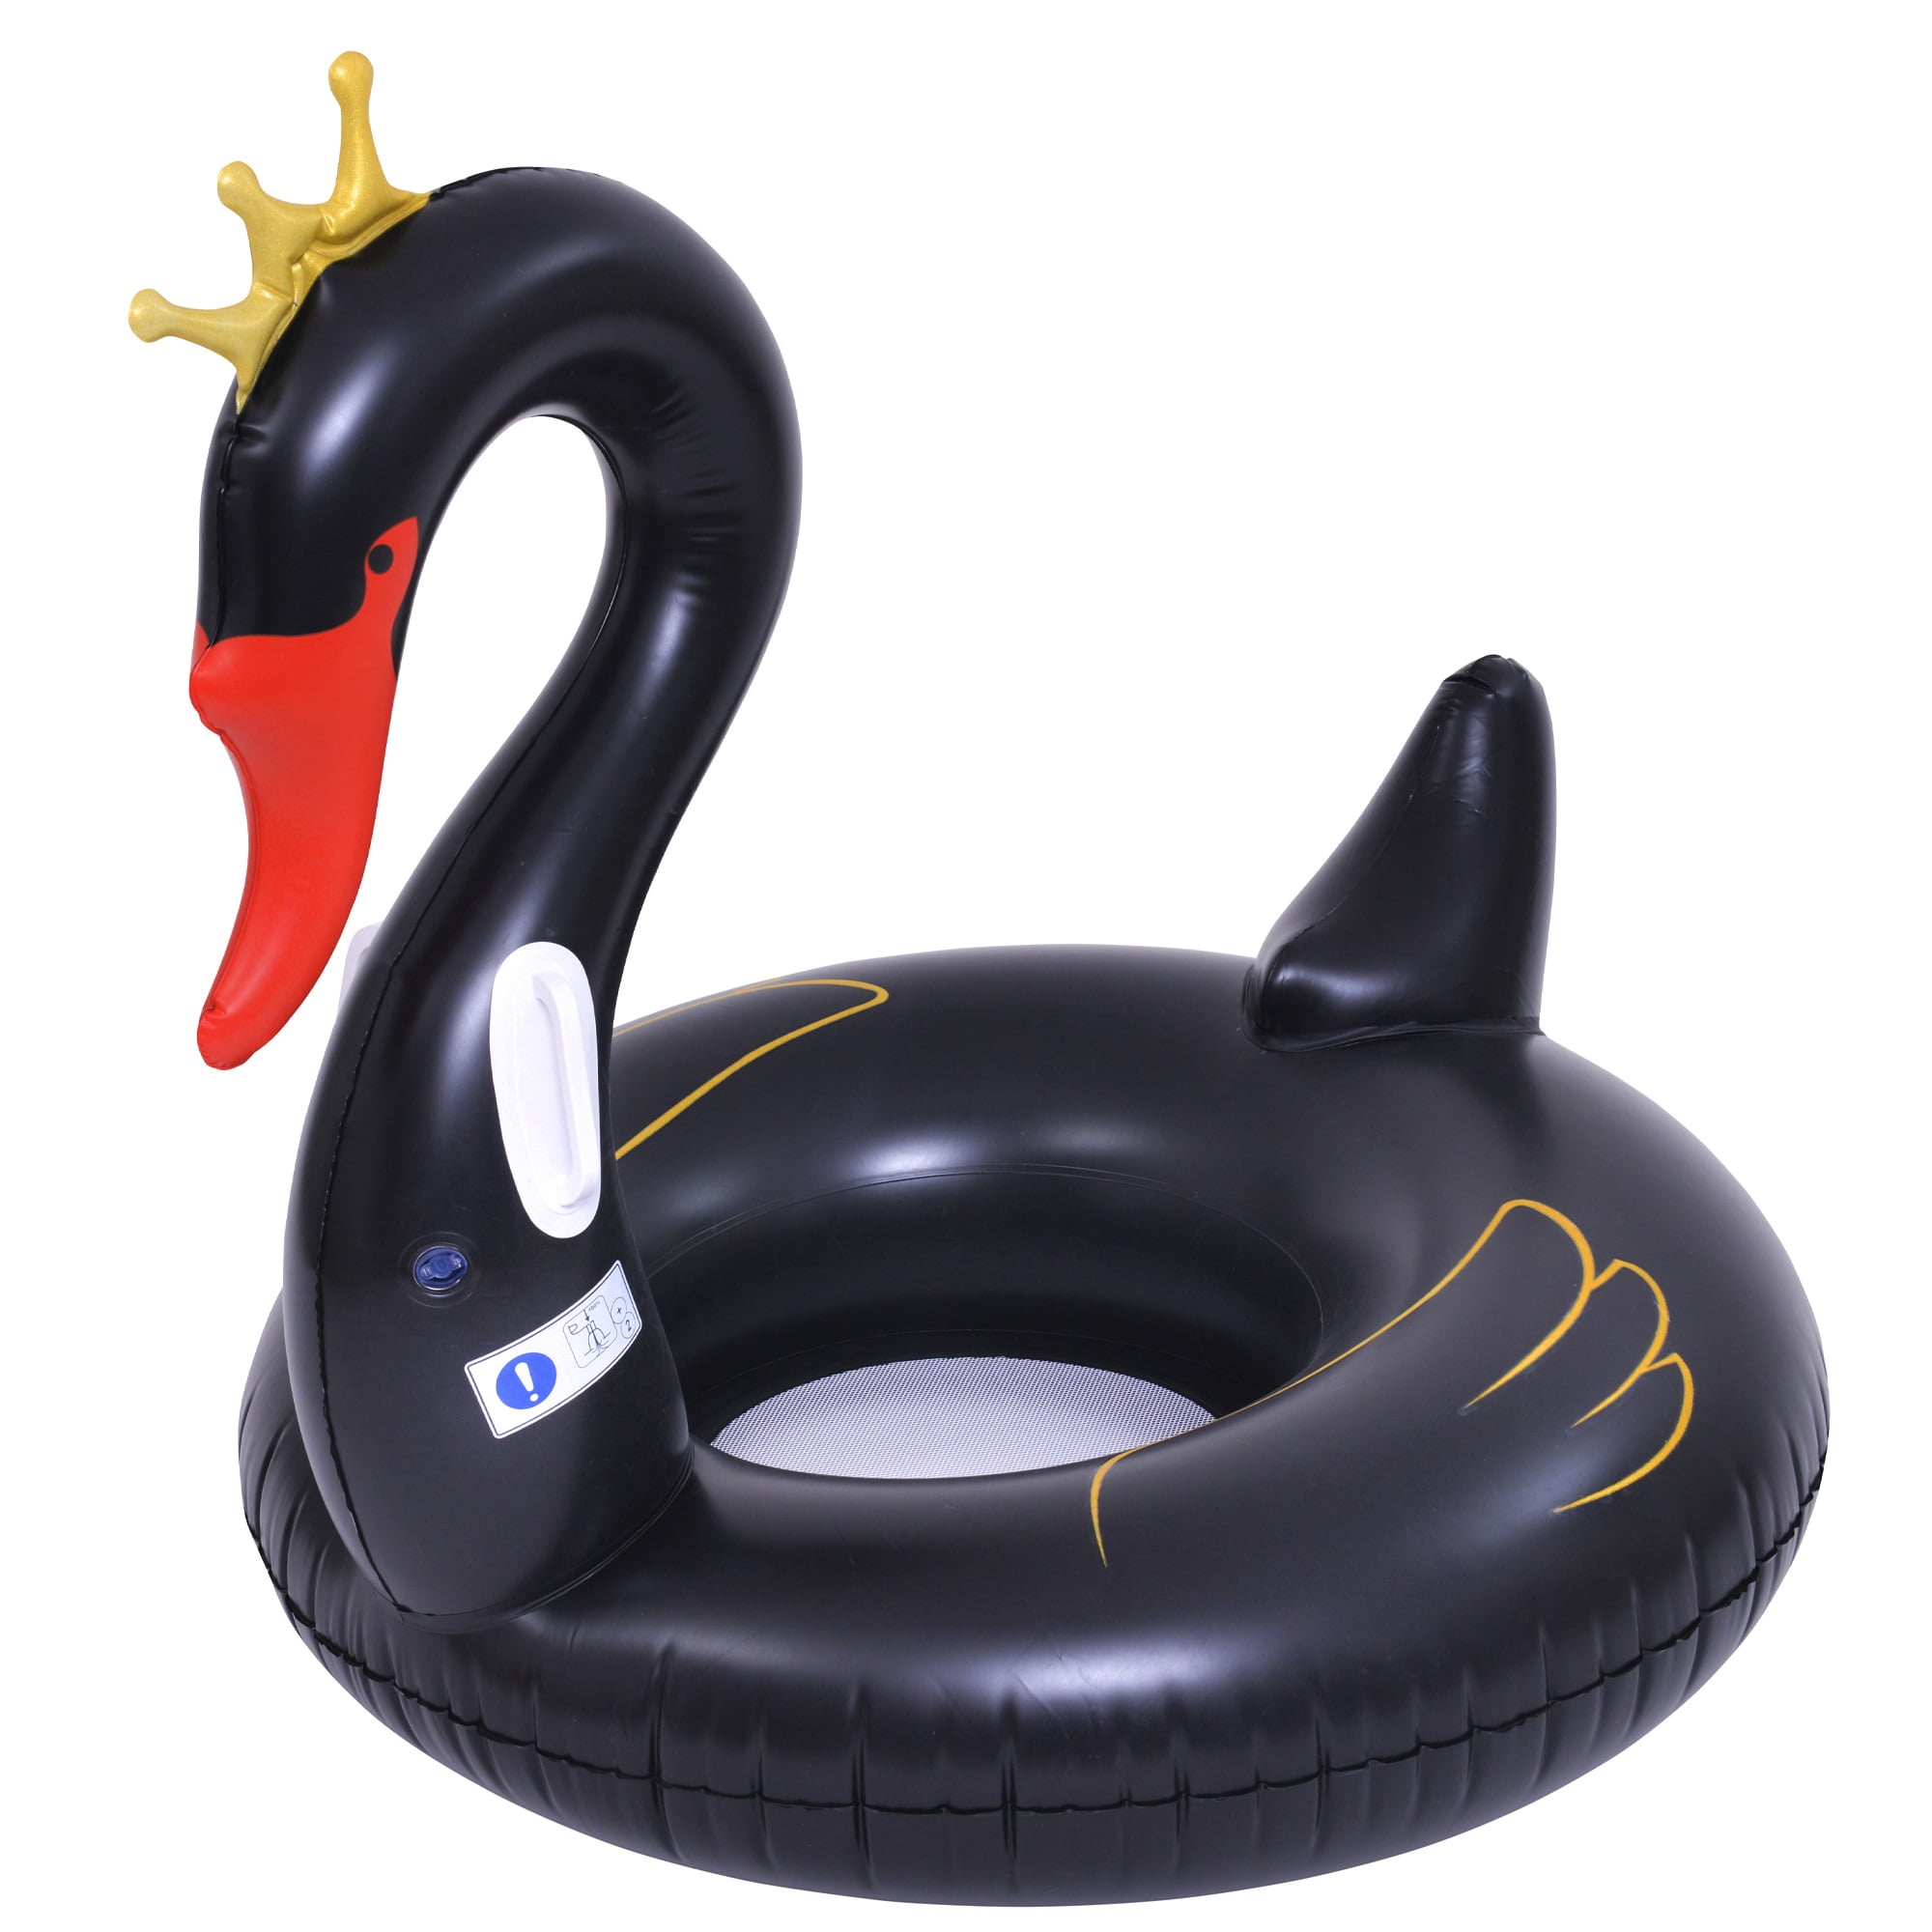 Tag et bad over heldig 45" Inflatable Black Swan Swimming Pool Lounger - Walmart.com